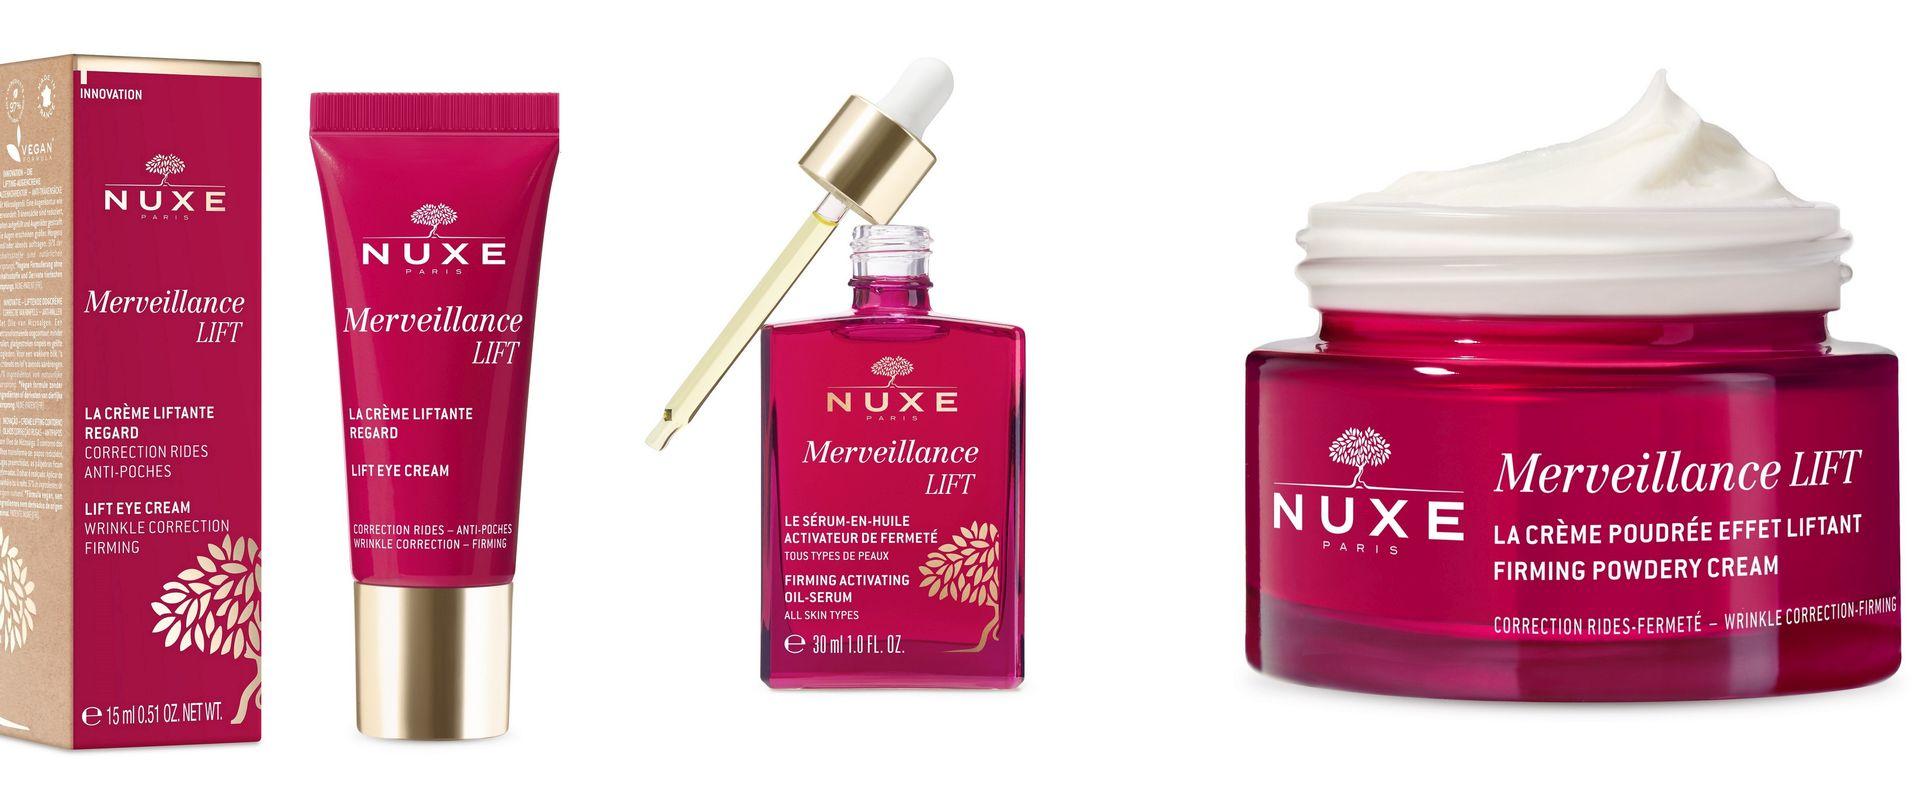 Nowe kosmetyki anti-aging od Nuxe - linia Merveillance Lift